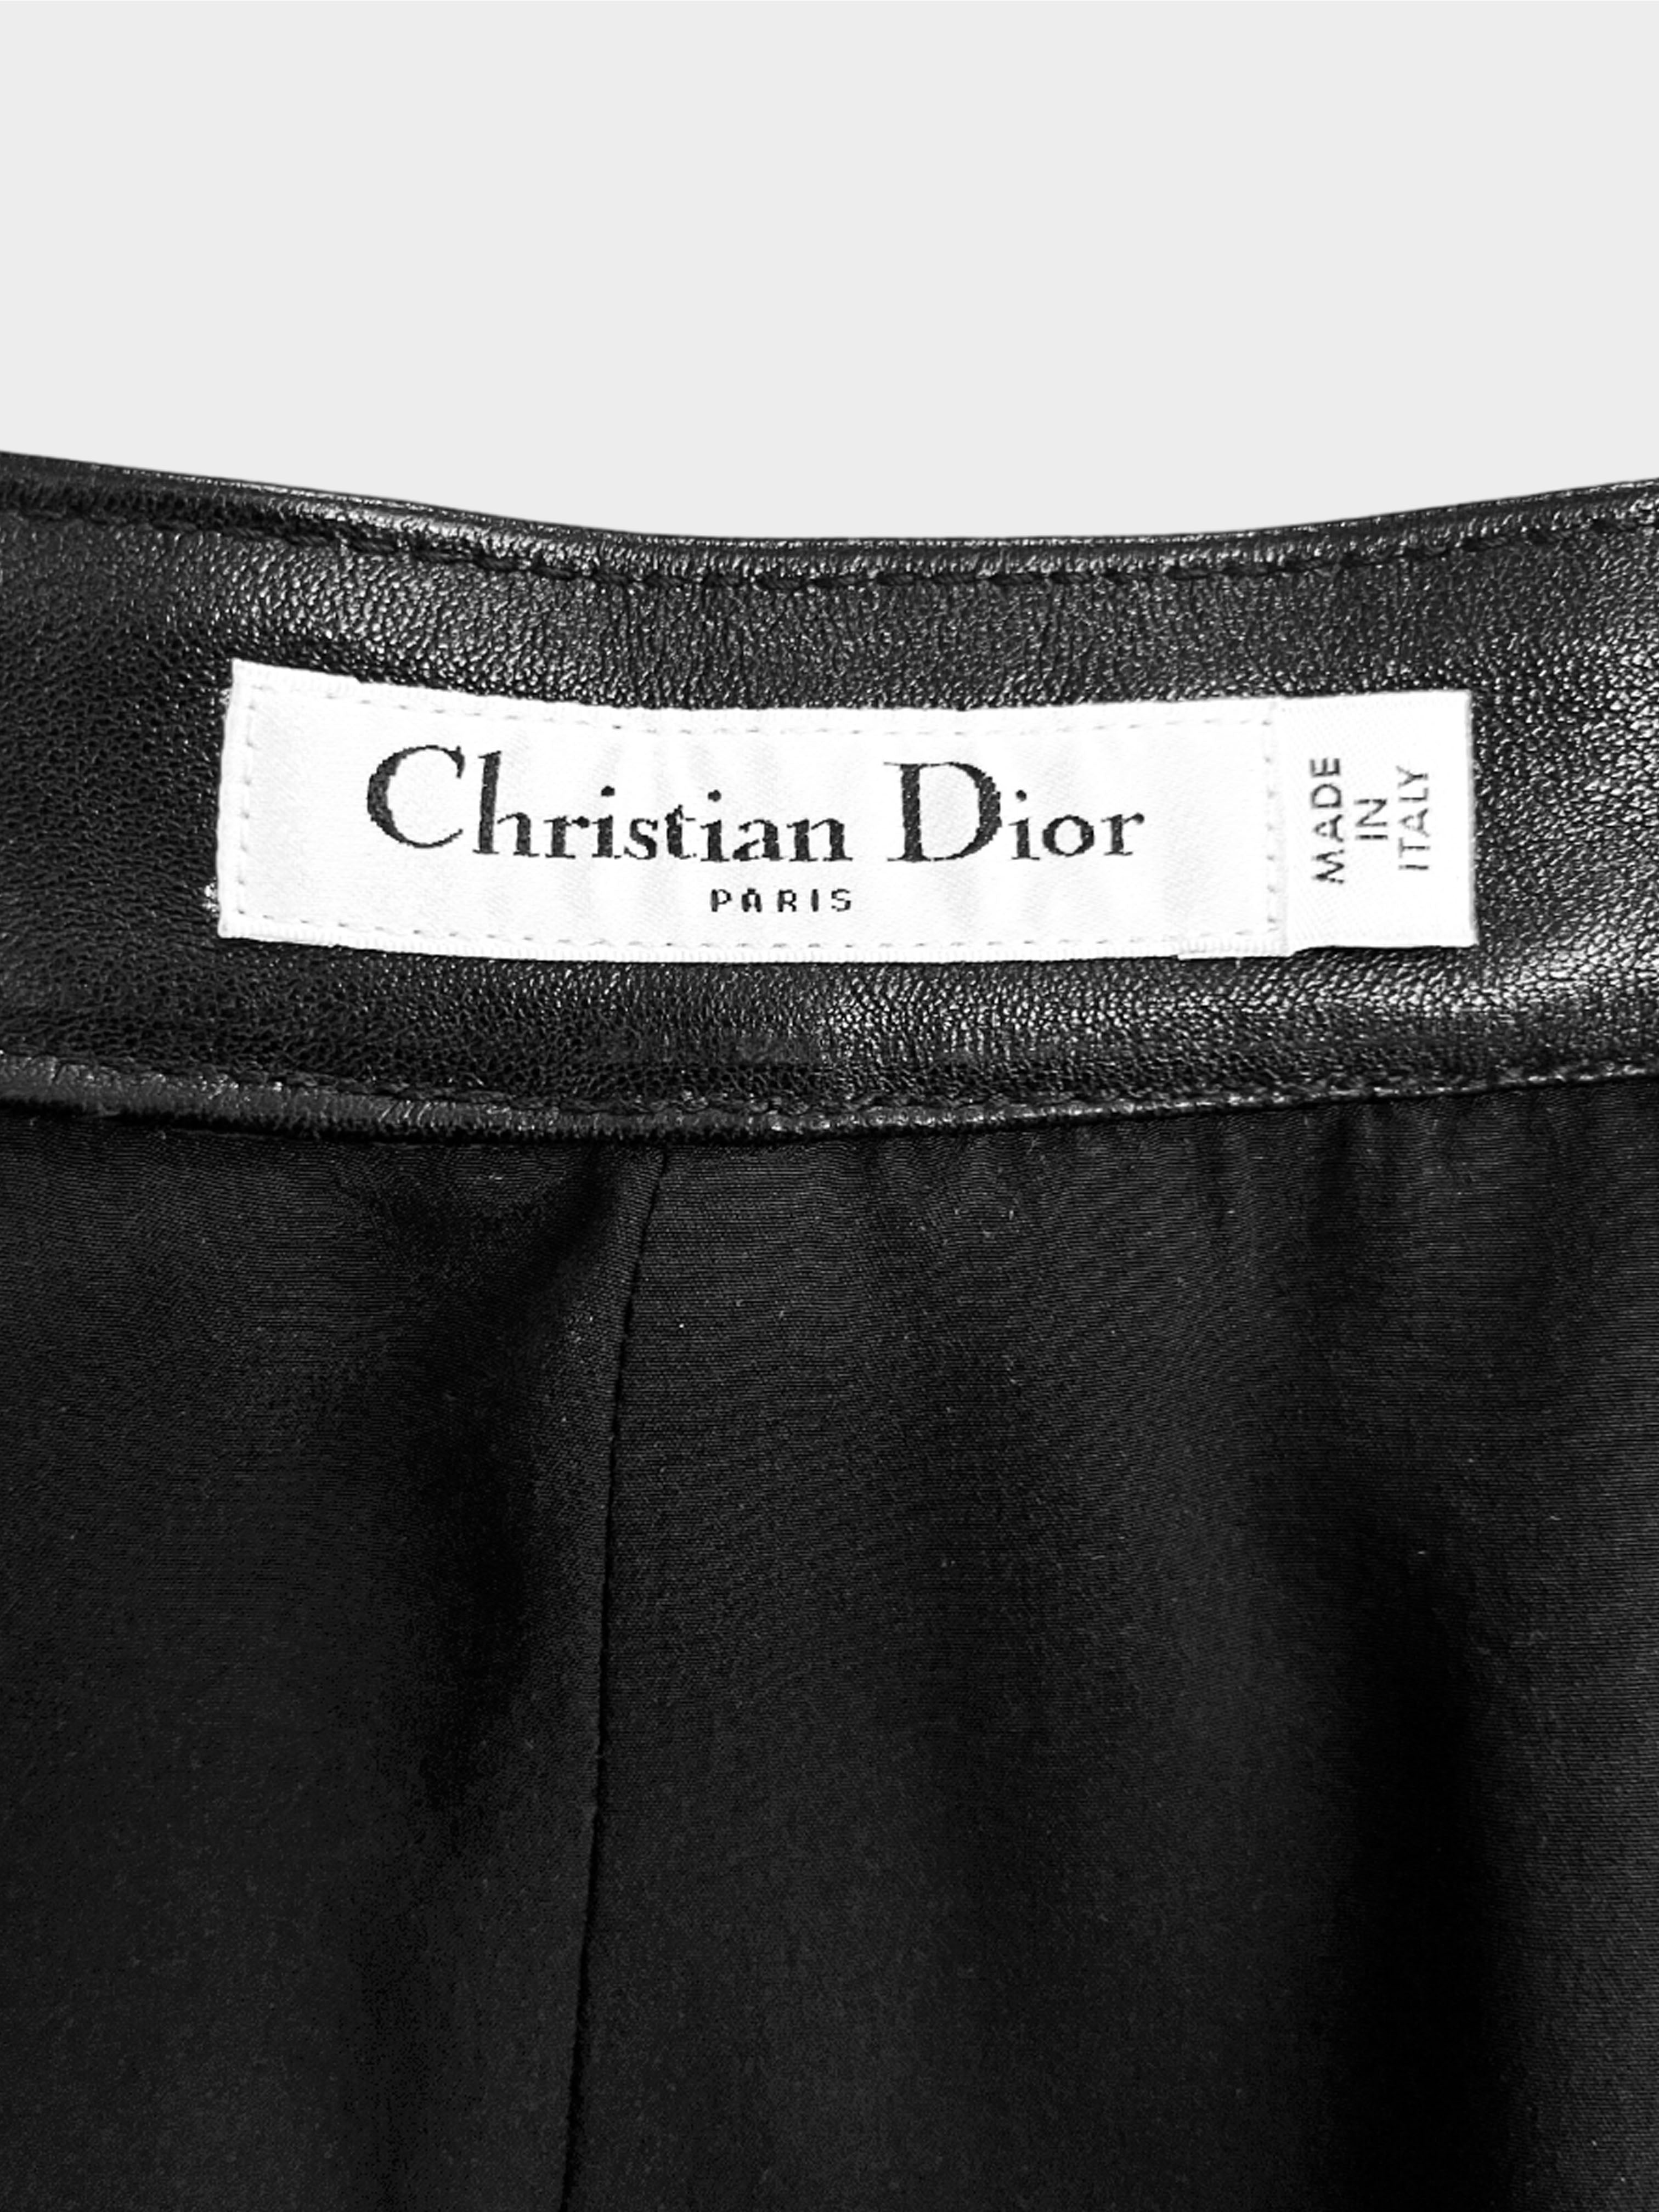 Christian Dior 2020 Black Lambskin Leather Mini Skirt with Pockets